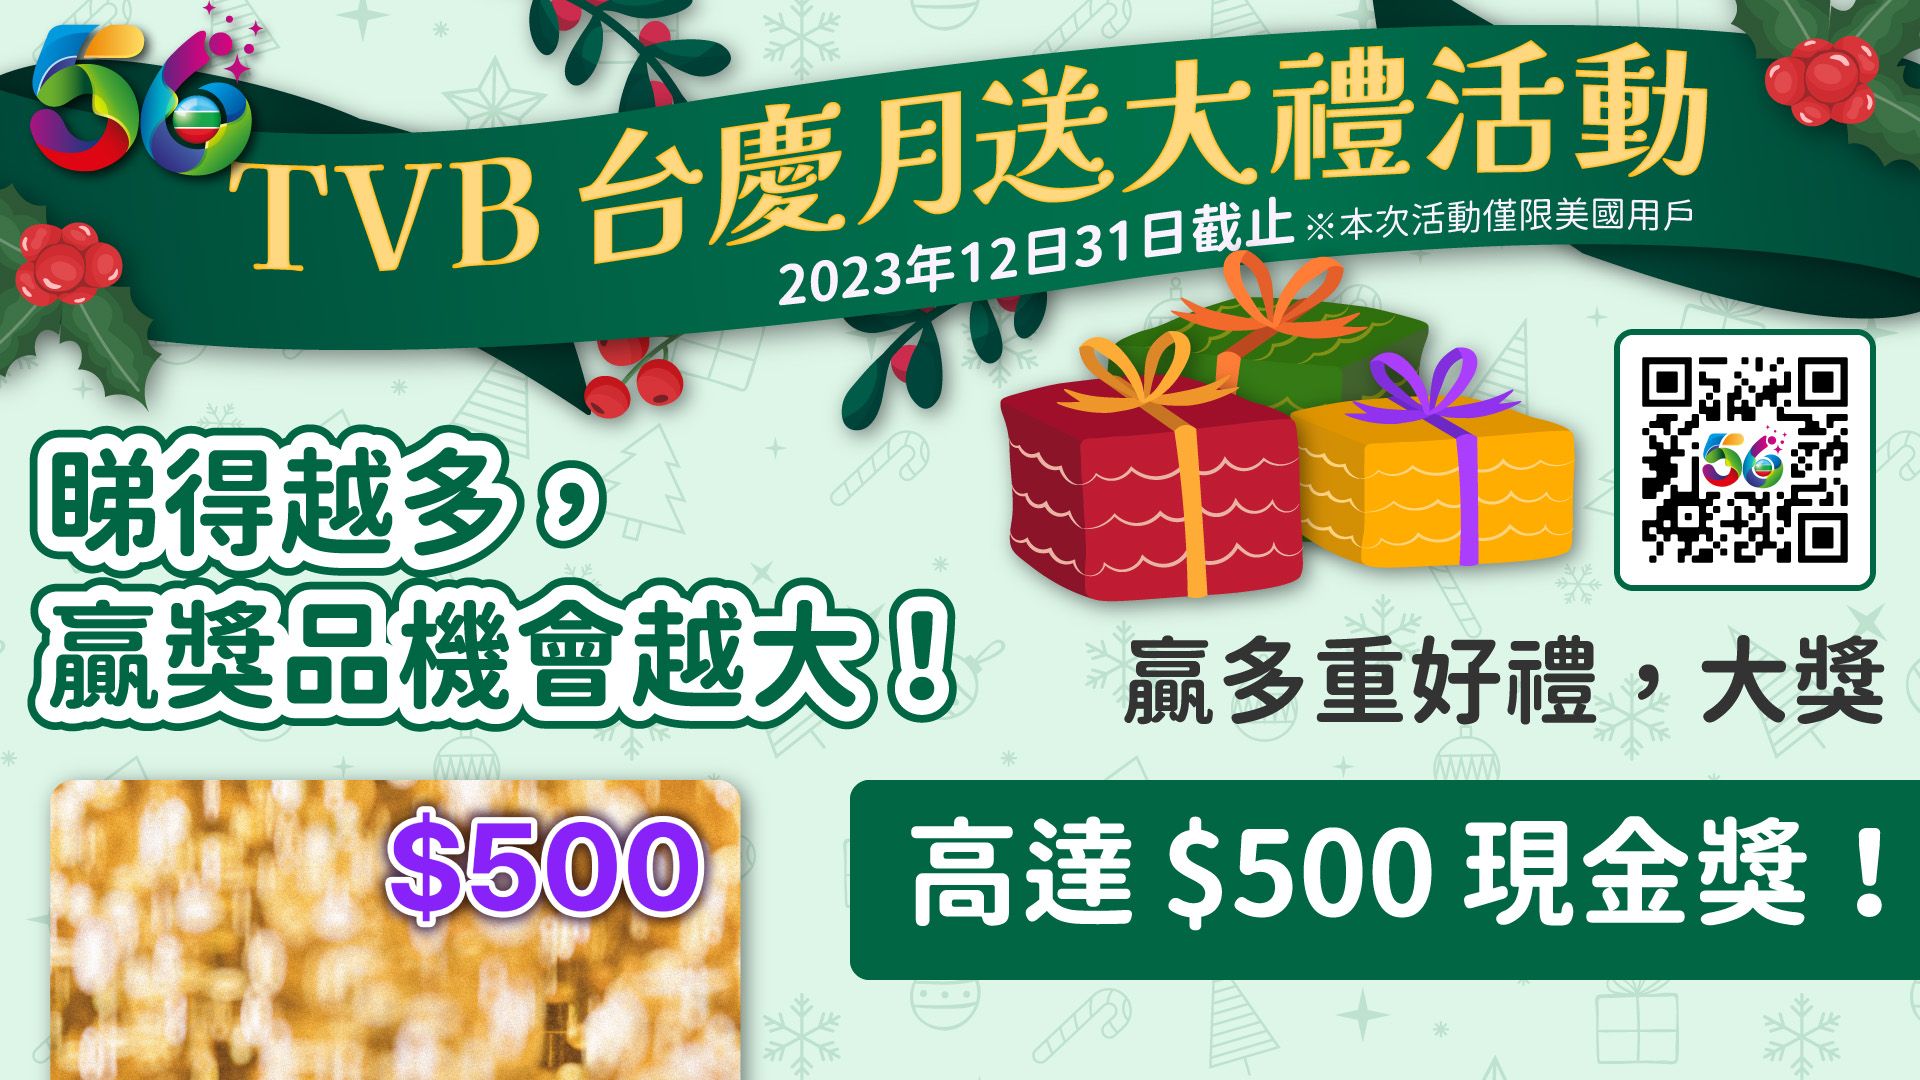 TVB台慶月送大禮-TVB 56th Anniversary Gala Campaign